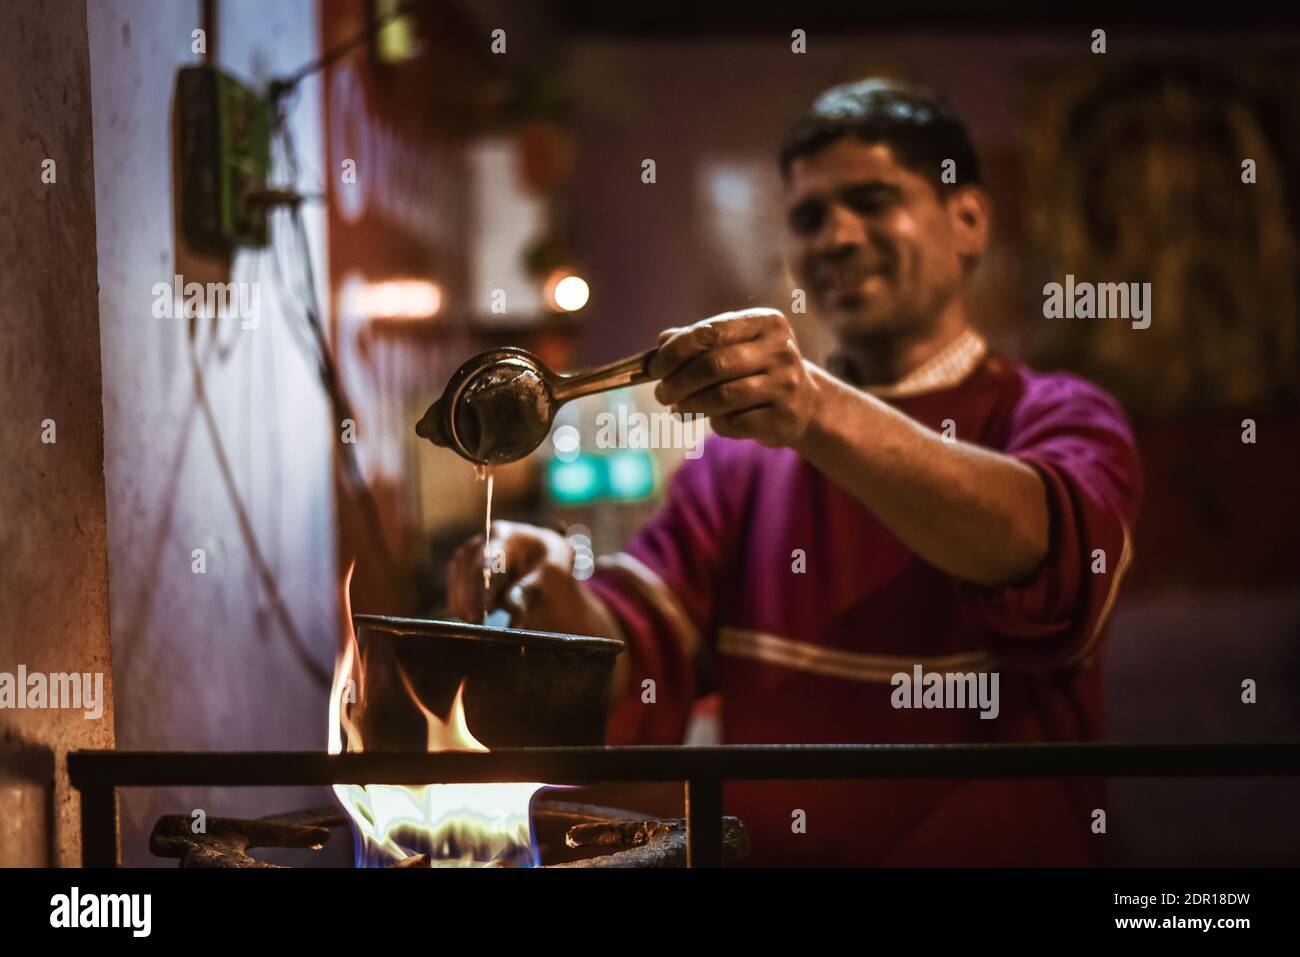 Indian Man Making Tea In Restaurant Stock Photo